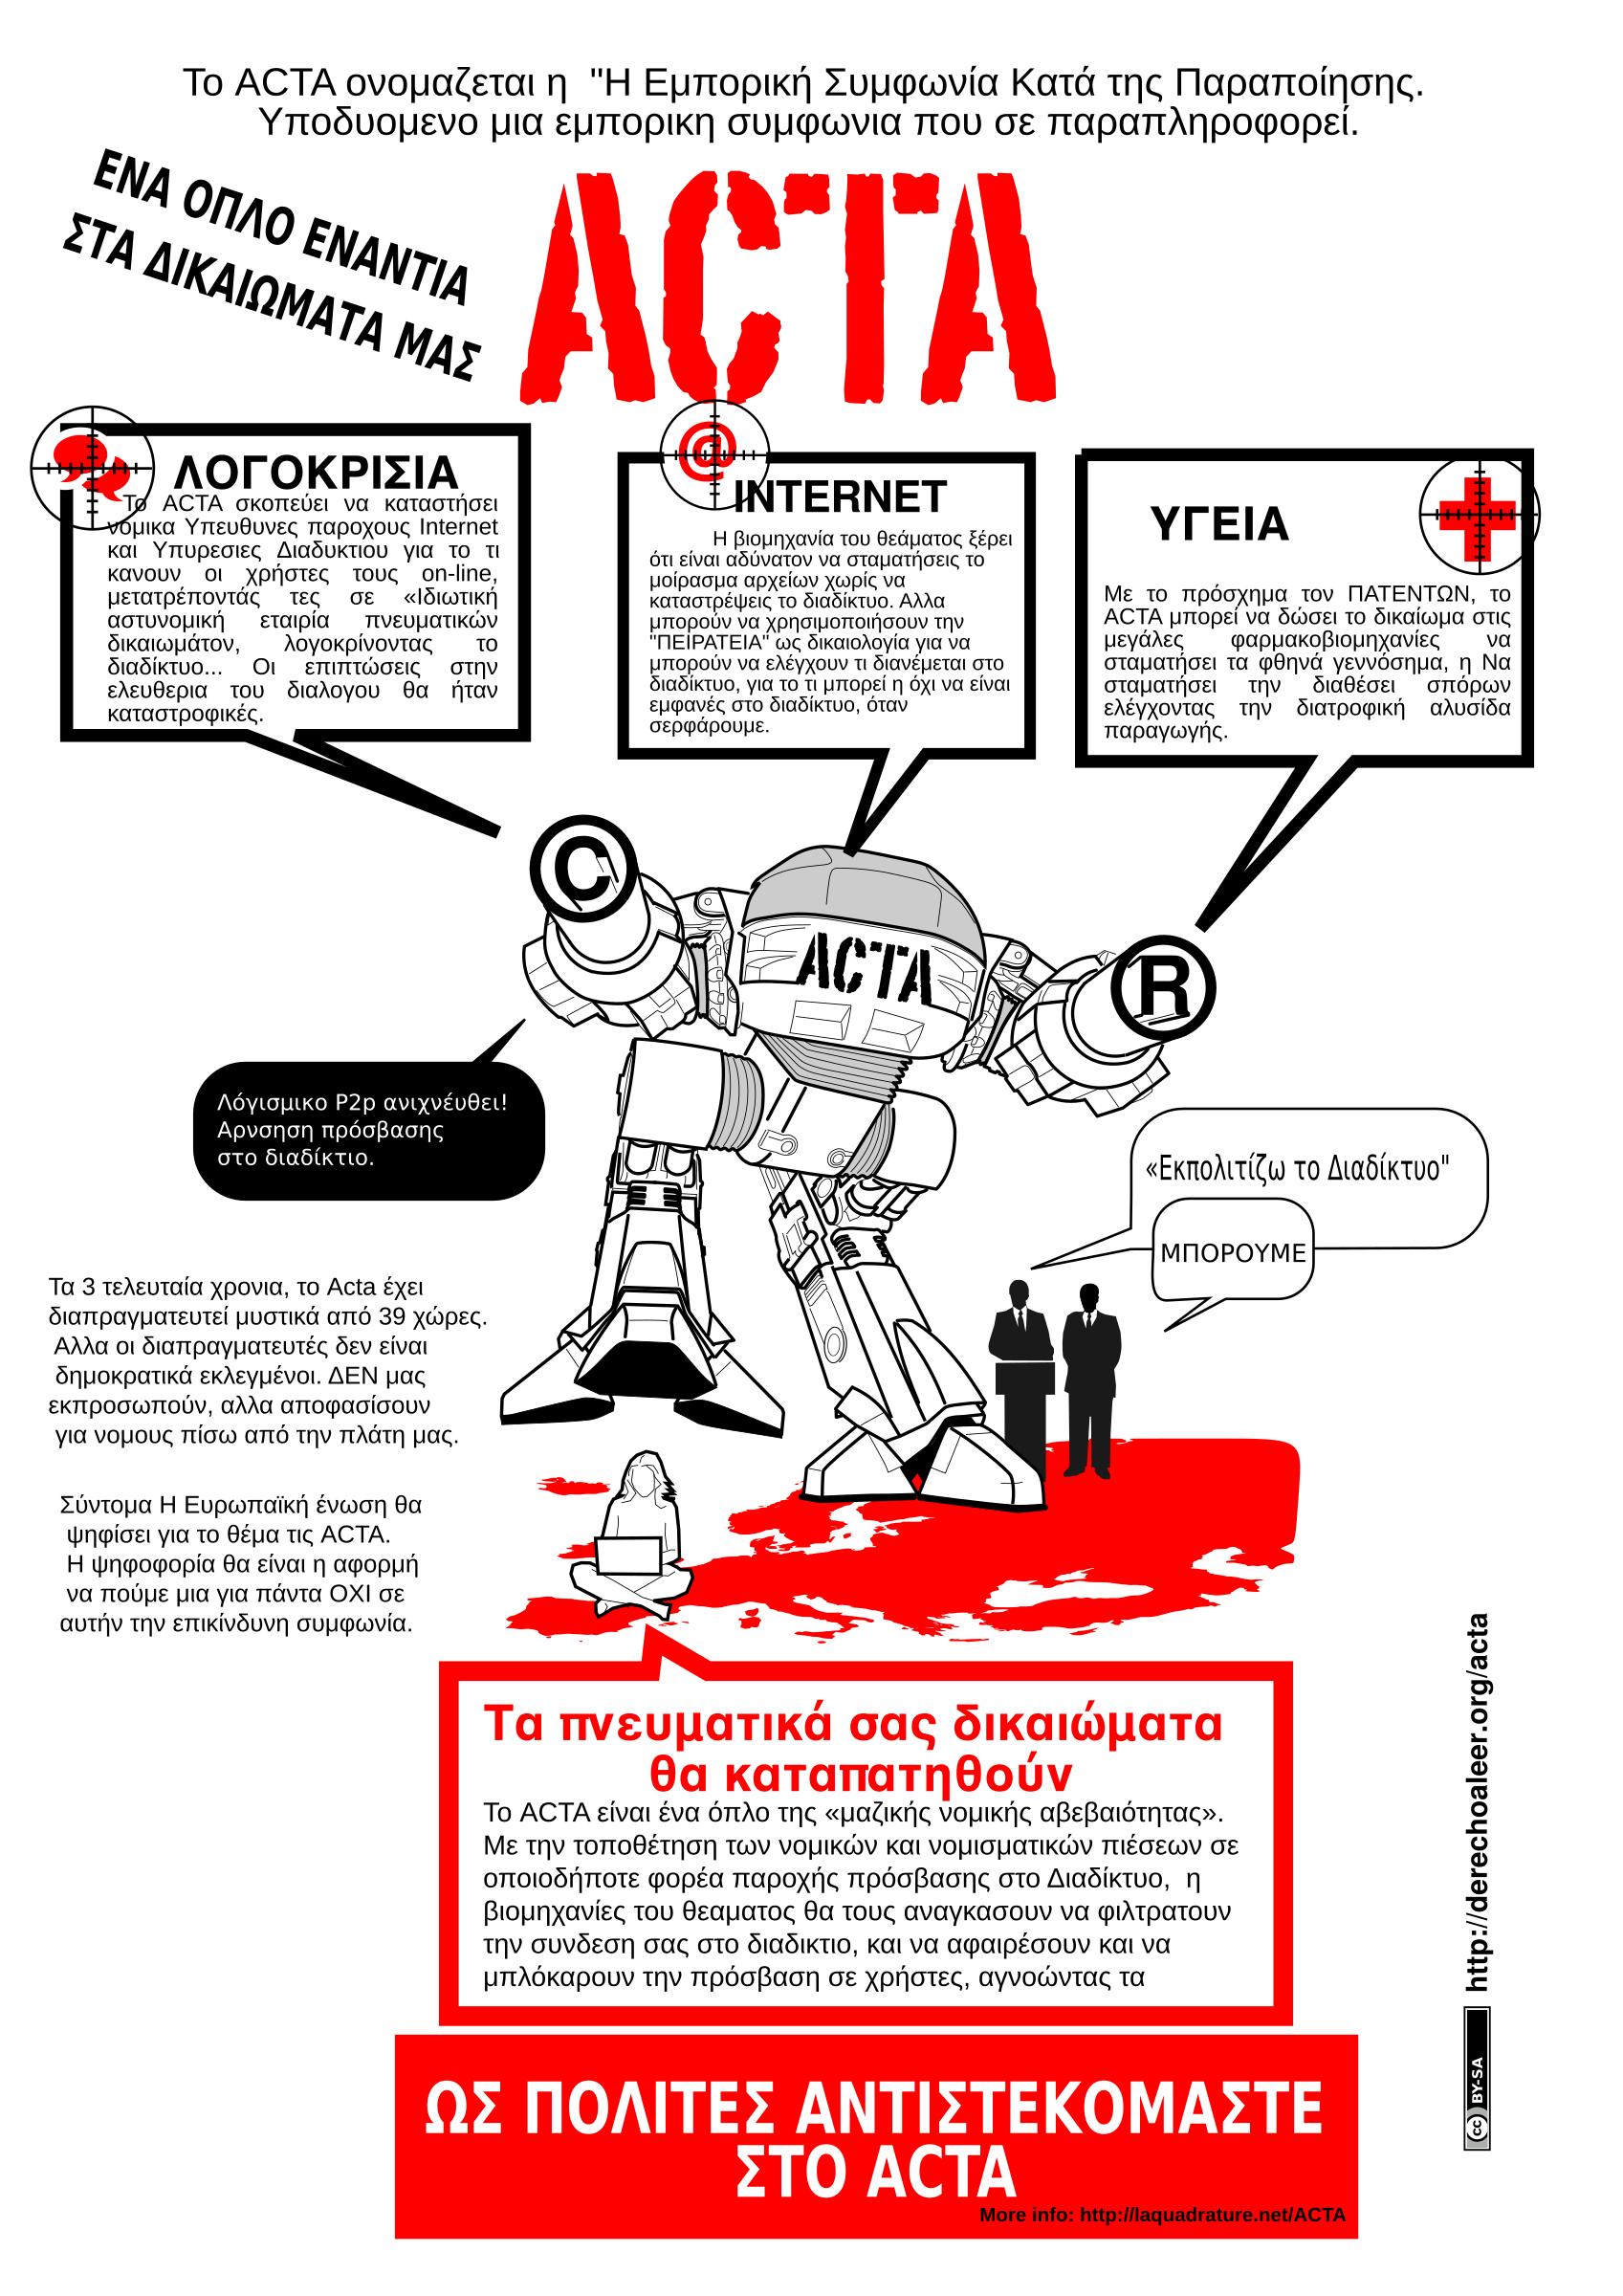 ACTA STOP GREEK PNG icons